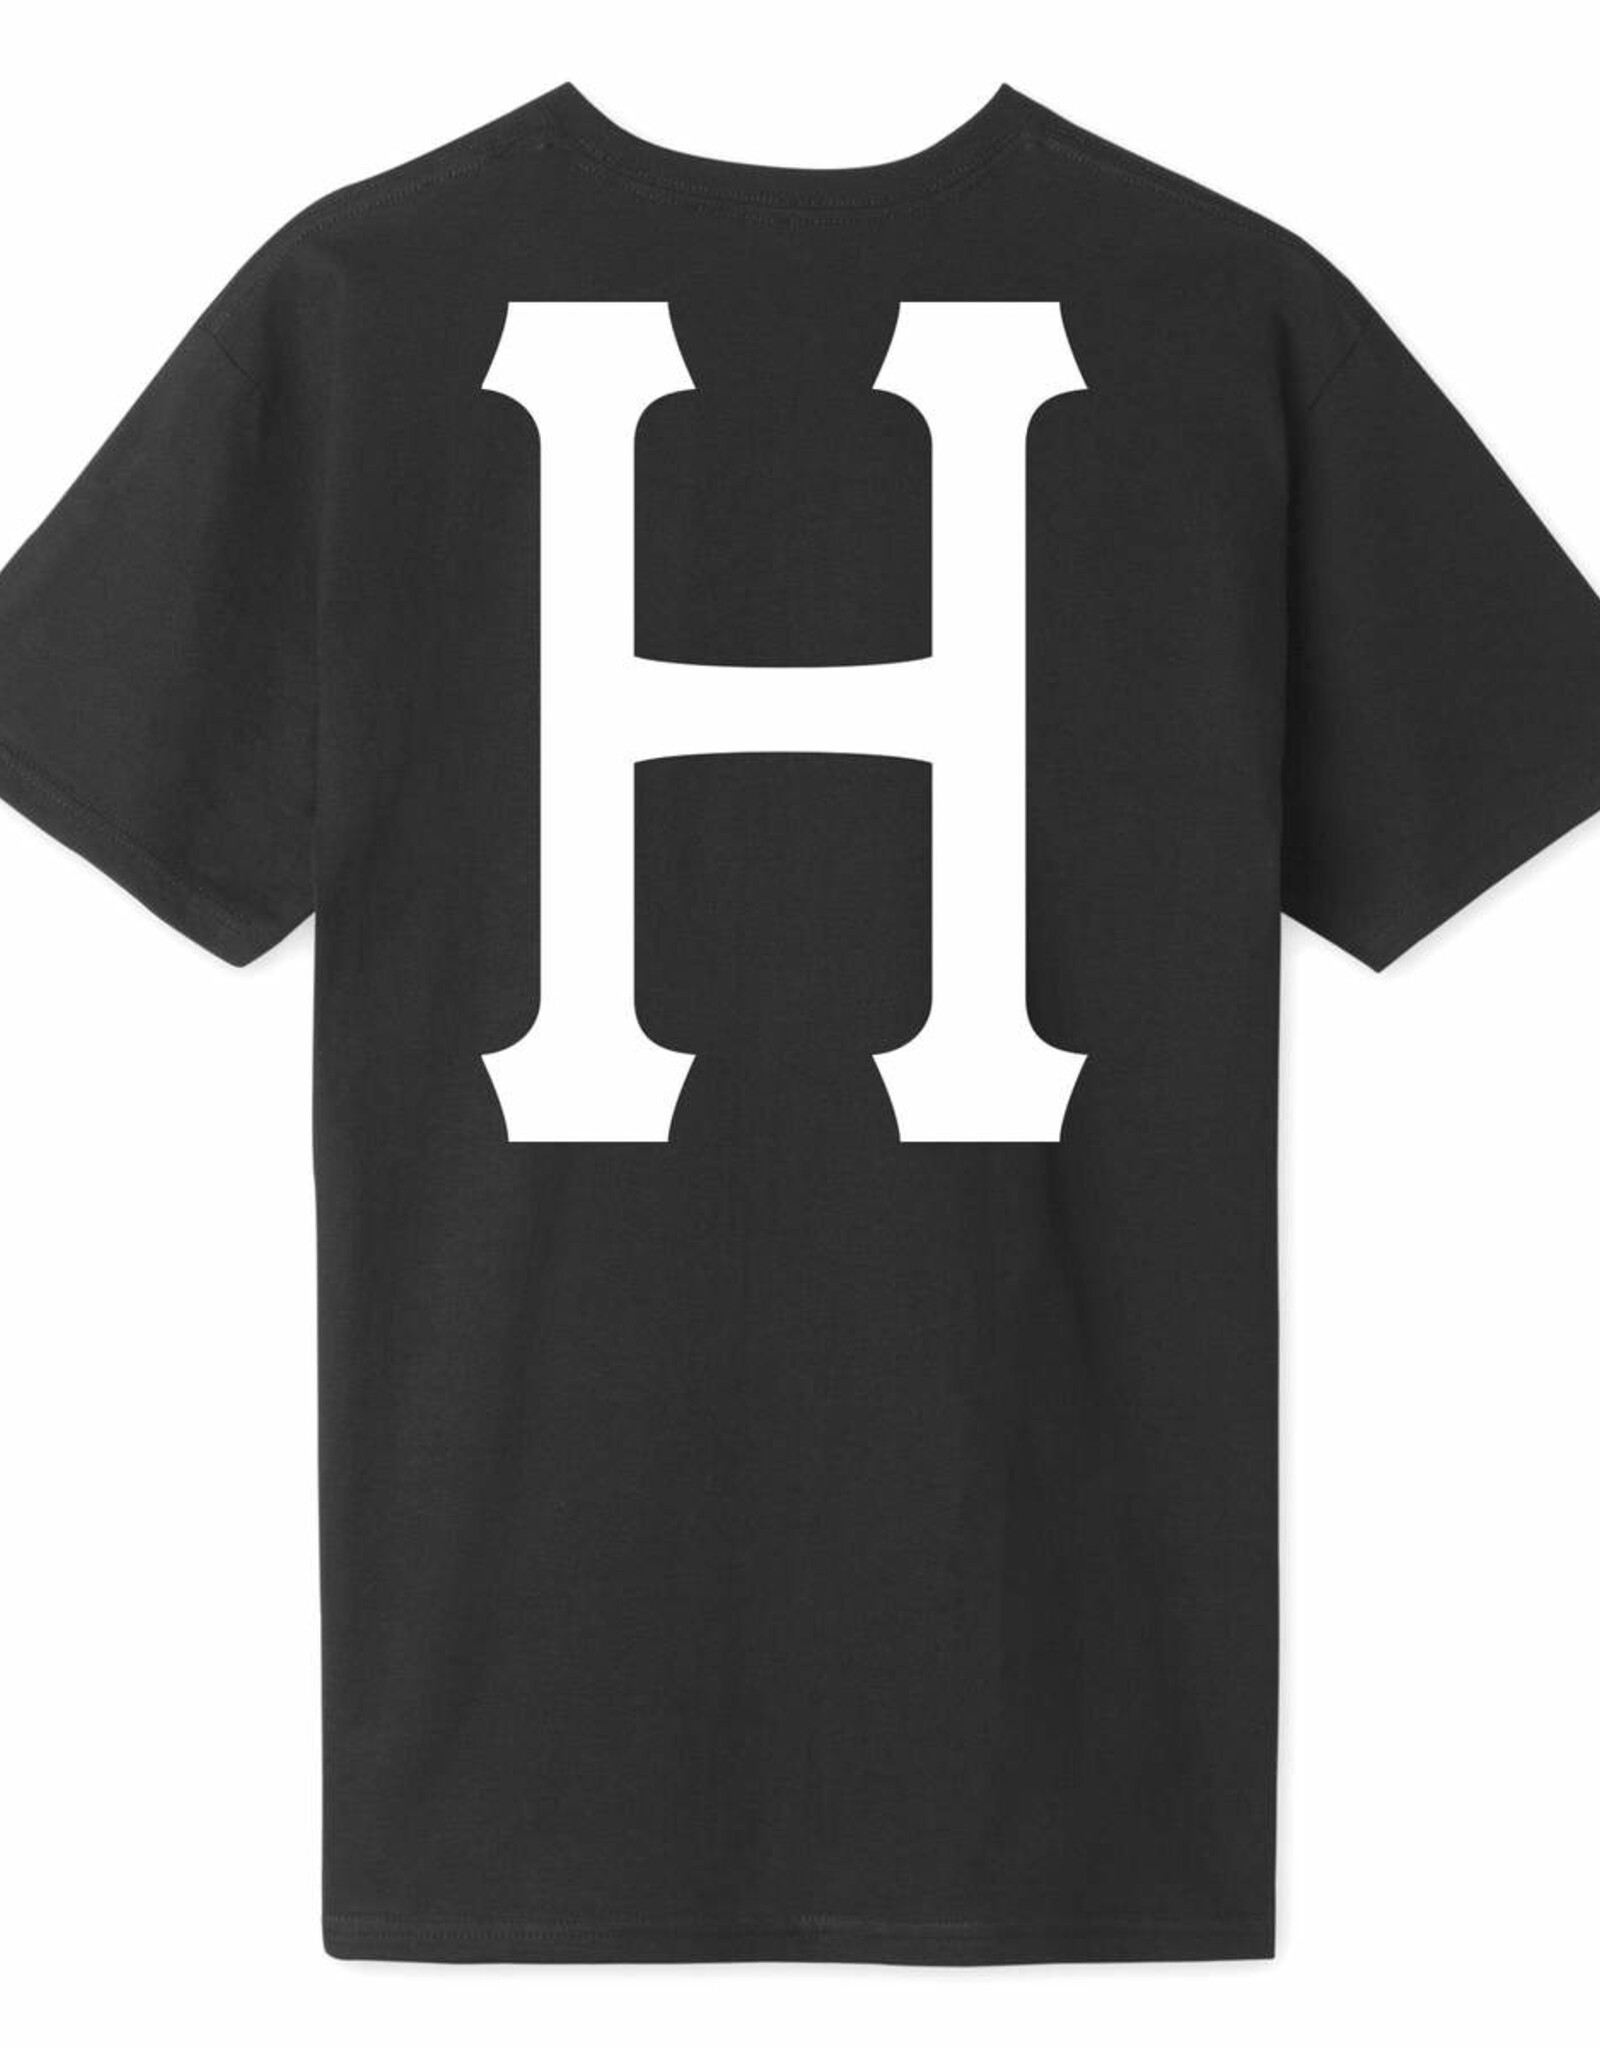 HUF - ESSENTIAL CLASSIC H S/S - BLACK -